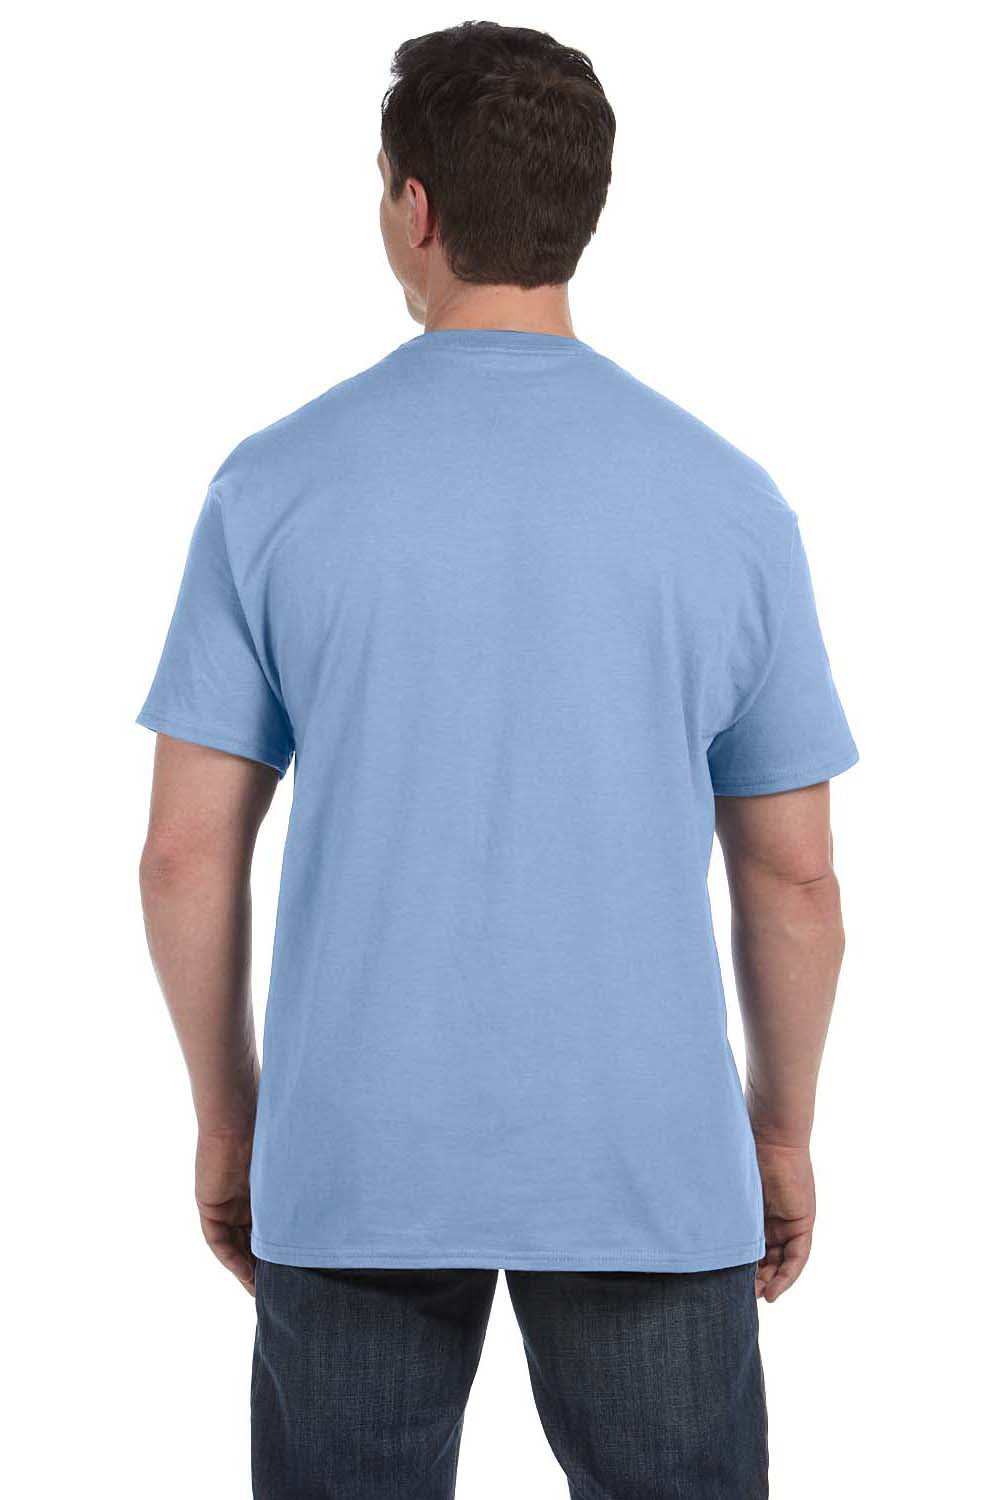 Hanes H5590 Mens ComfortSoft Short Sleeve Crewneck T-Shirt w/ Pocket Light Blue Back